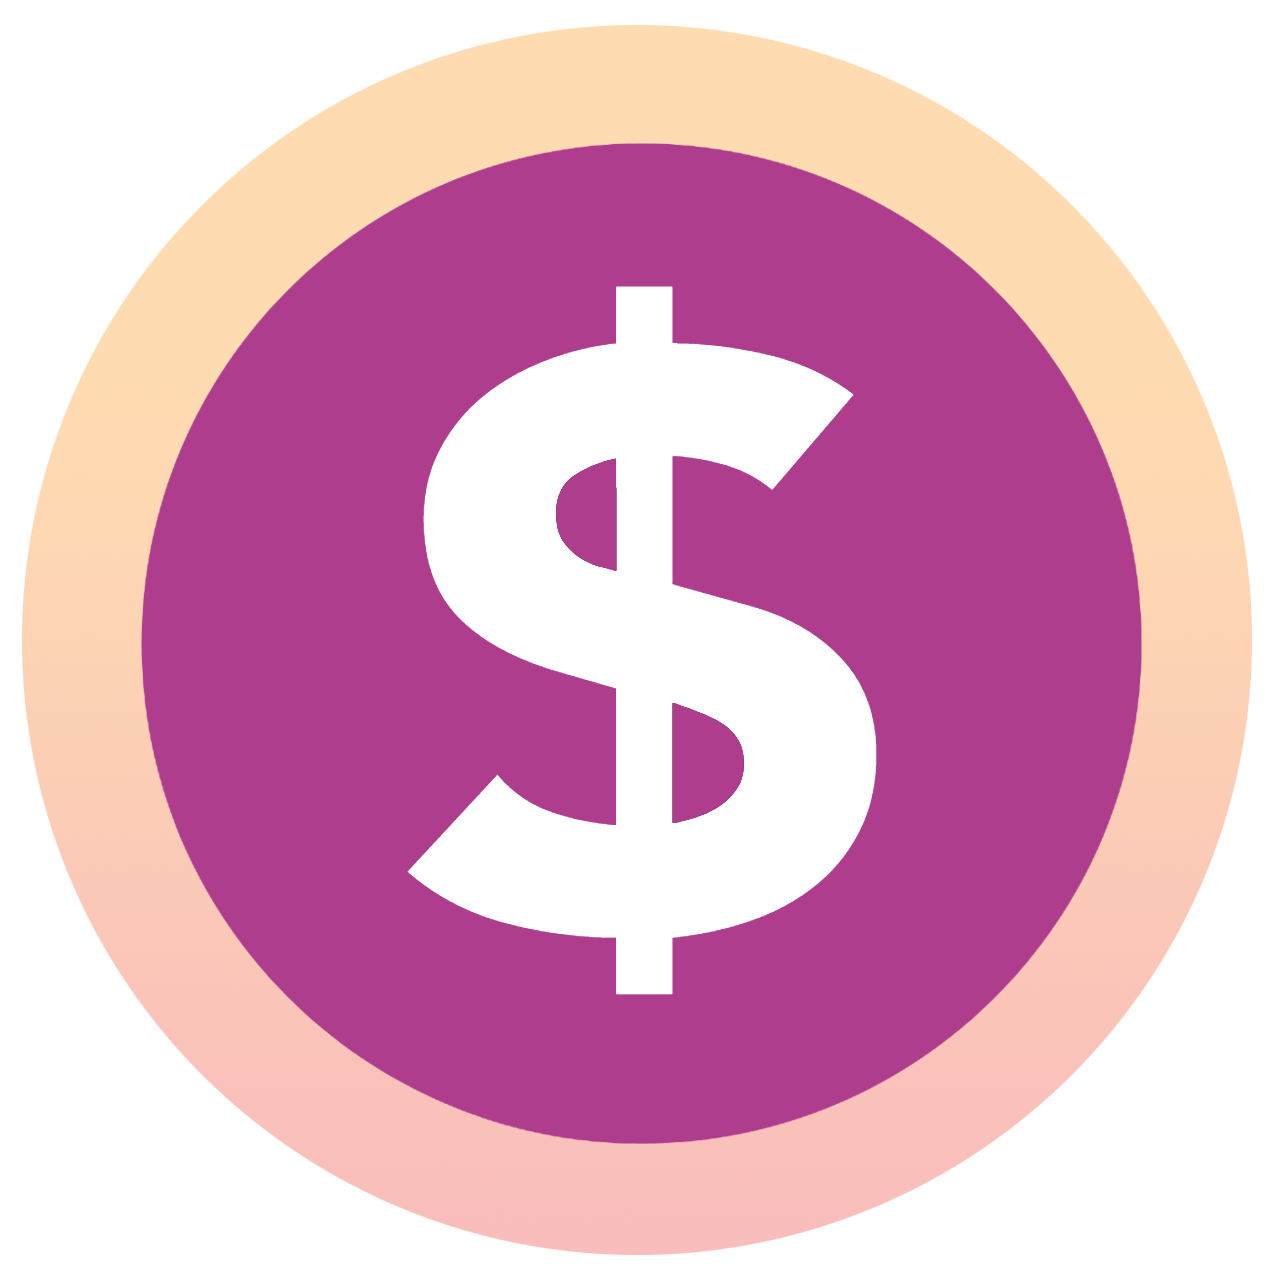 A dollar sign icon in a purple and orange square.